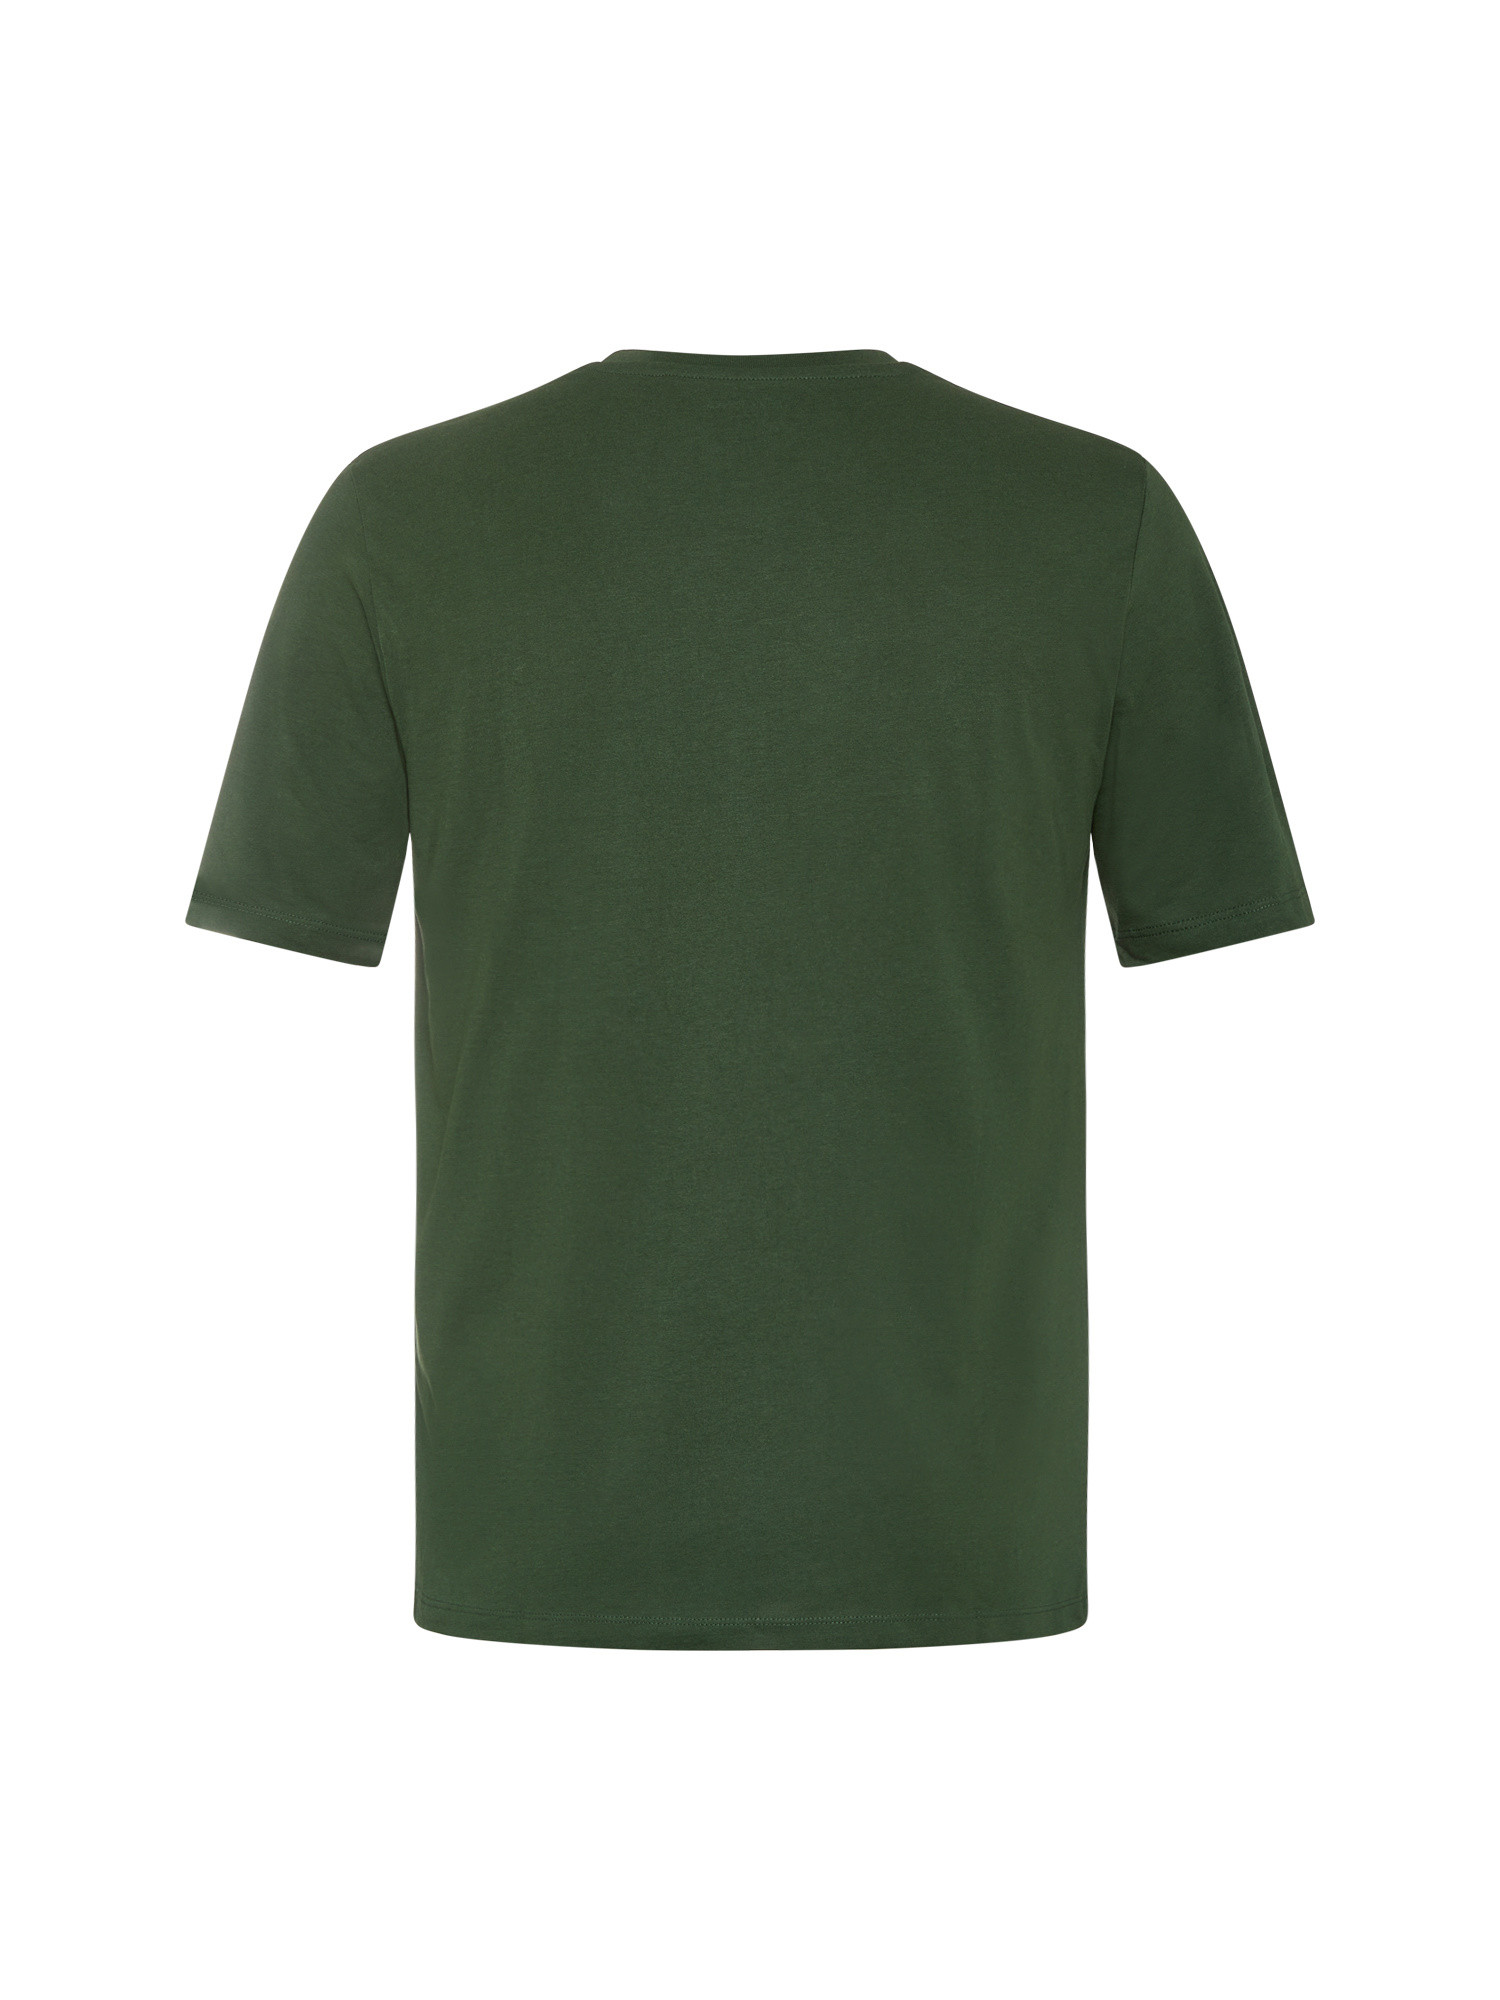 Jack & Jones - T-shirt in cotone, Verde scuro, large image number 1